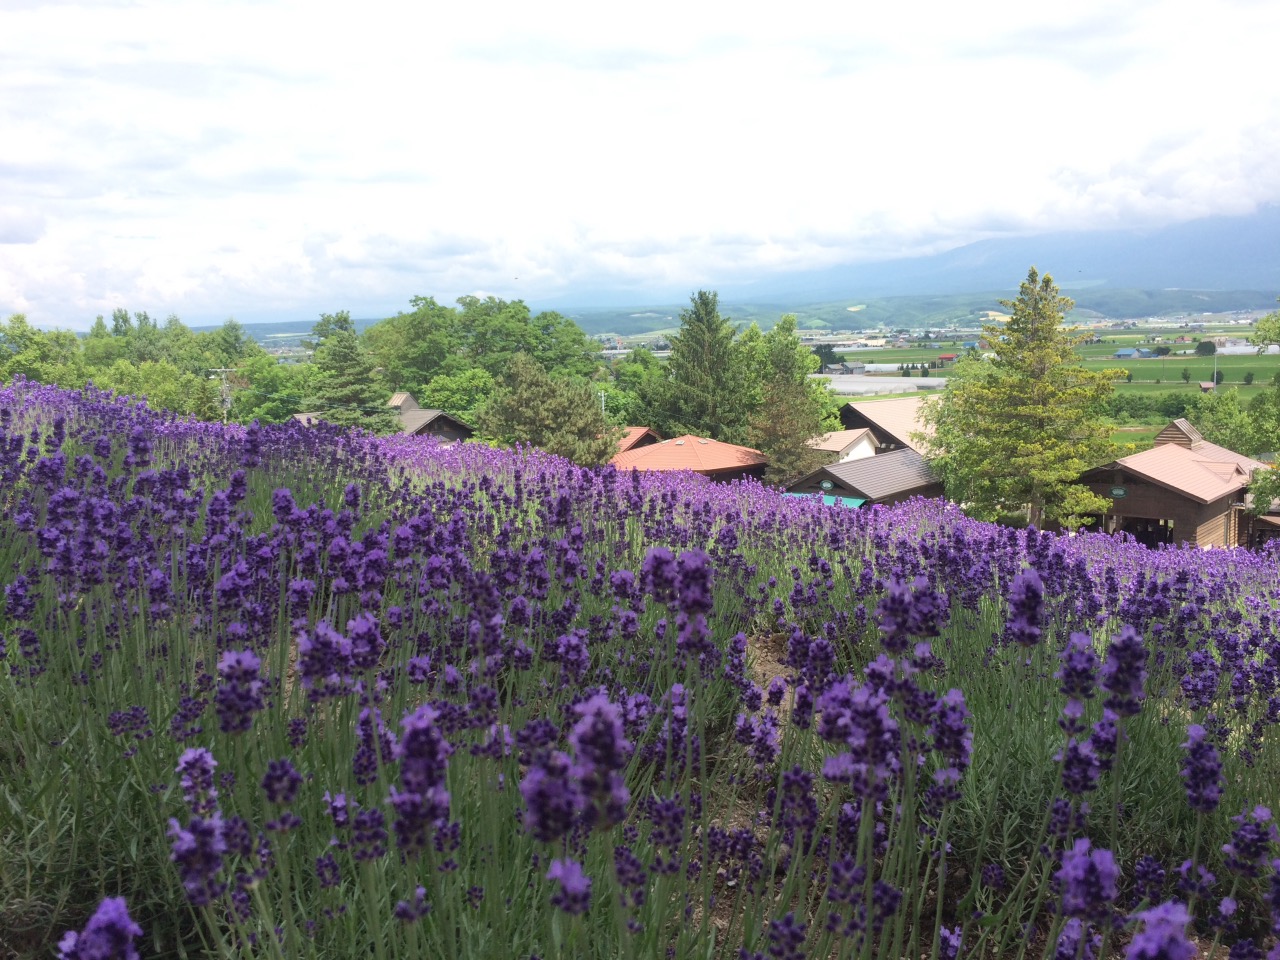 My first times travel in Hokkaido.Flower farm is my objective.